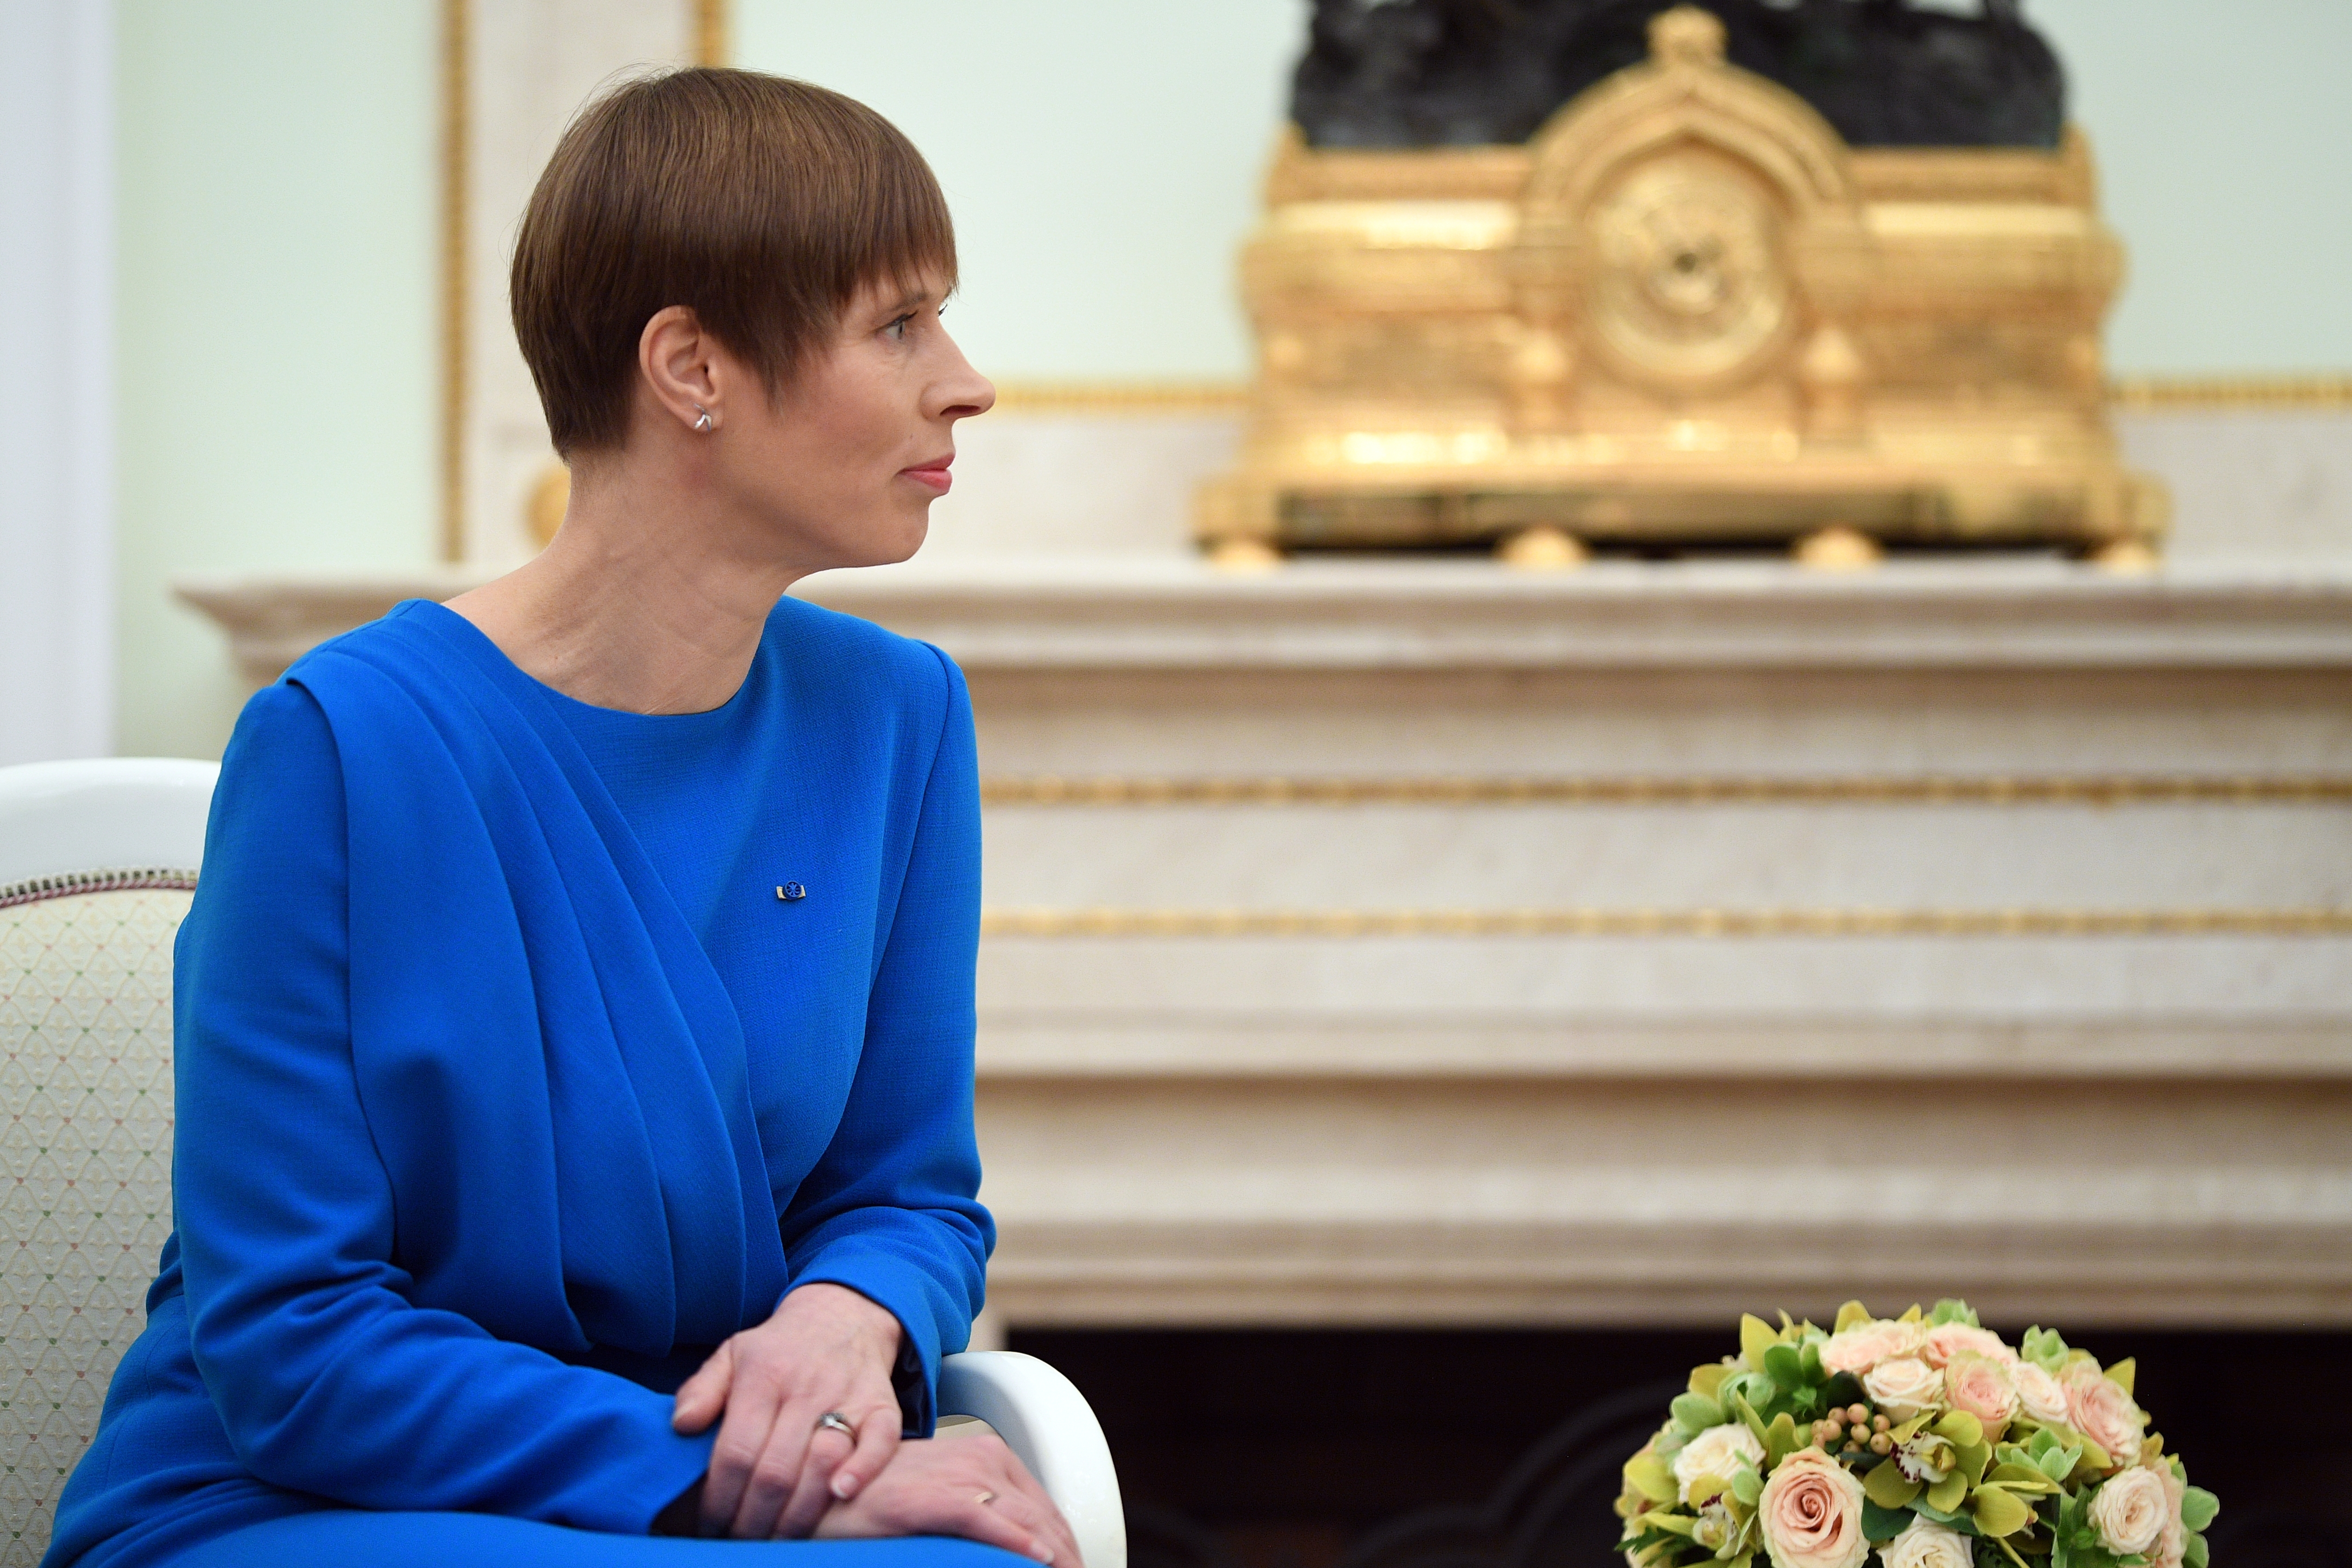 Кто рядом с президентом эстонии на